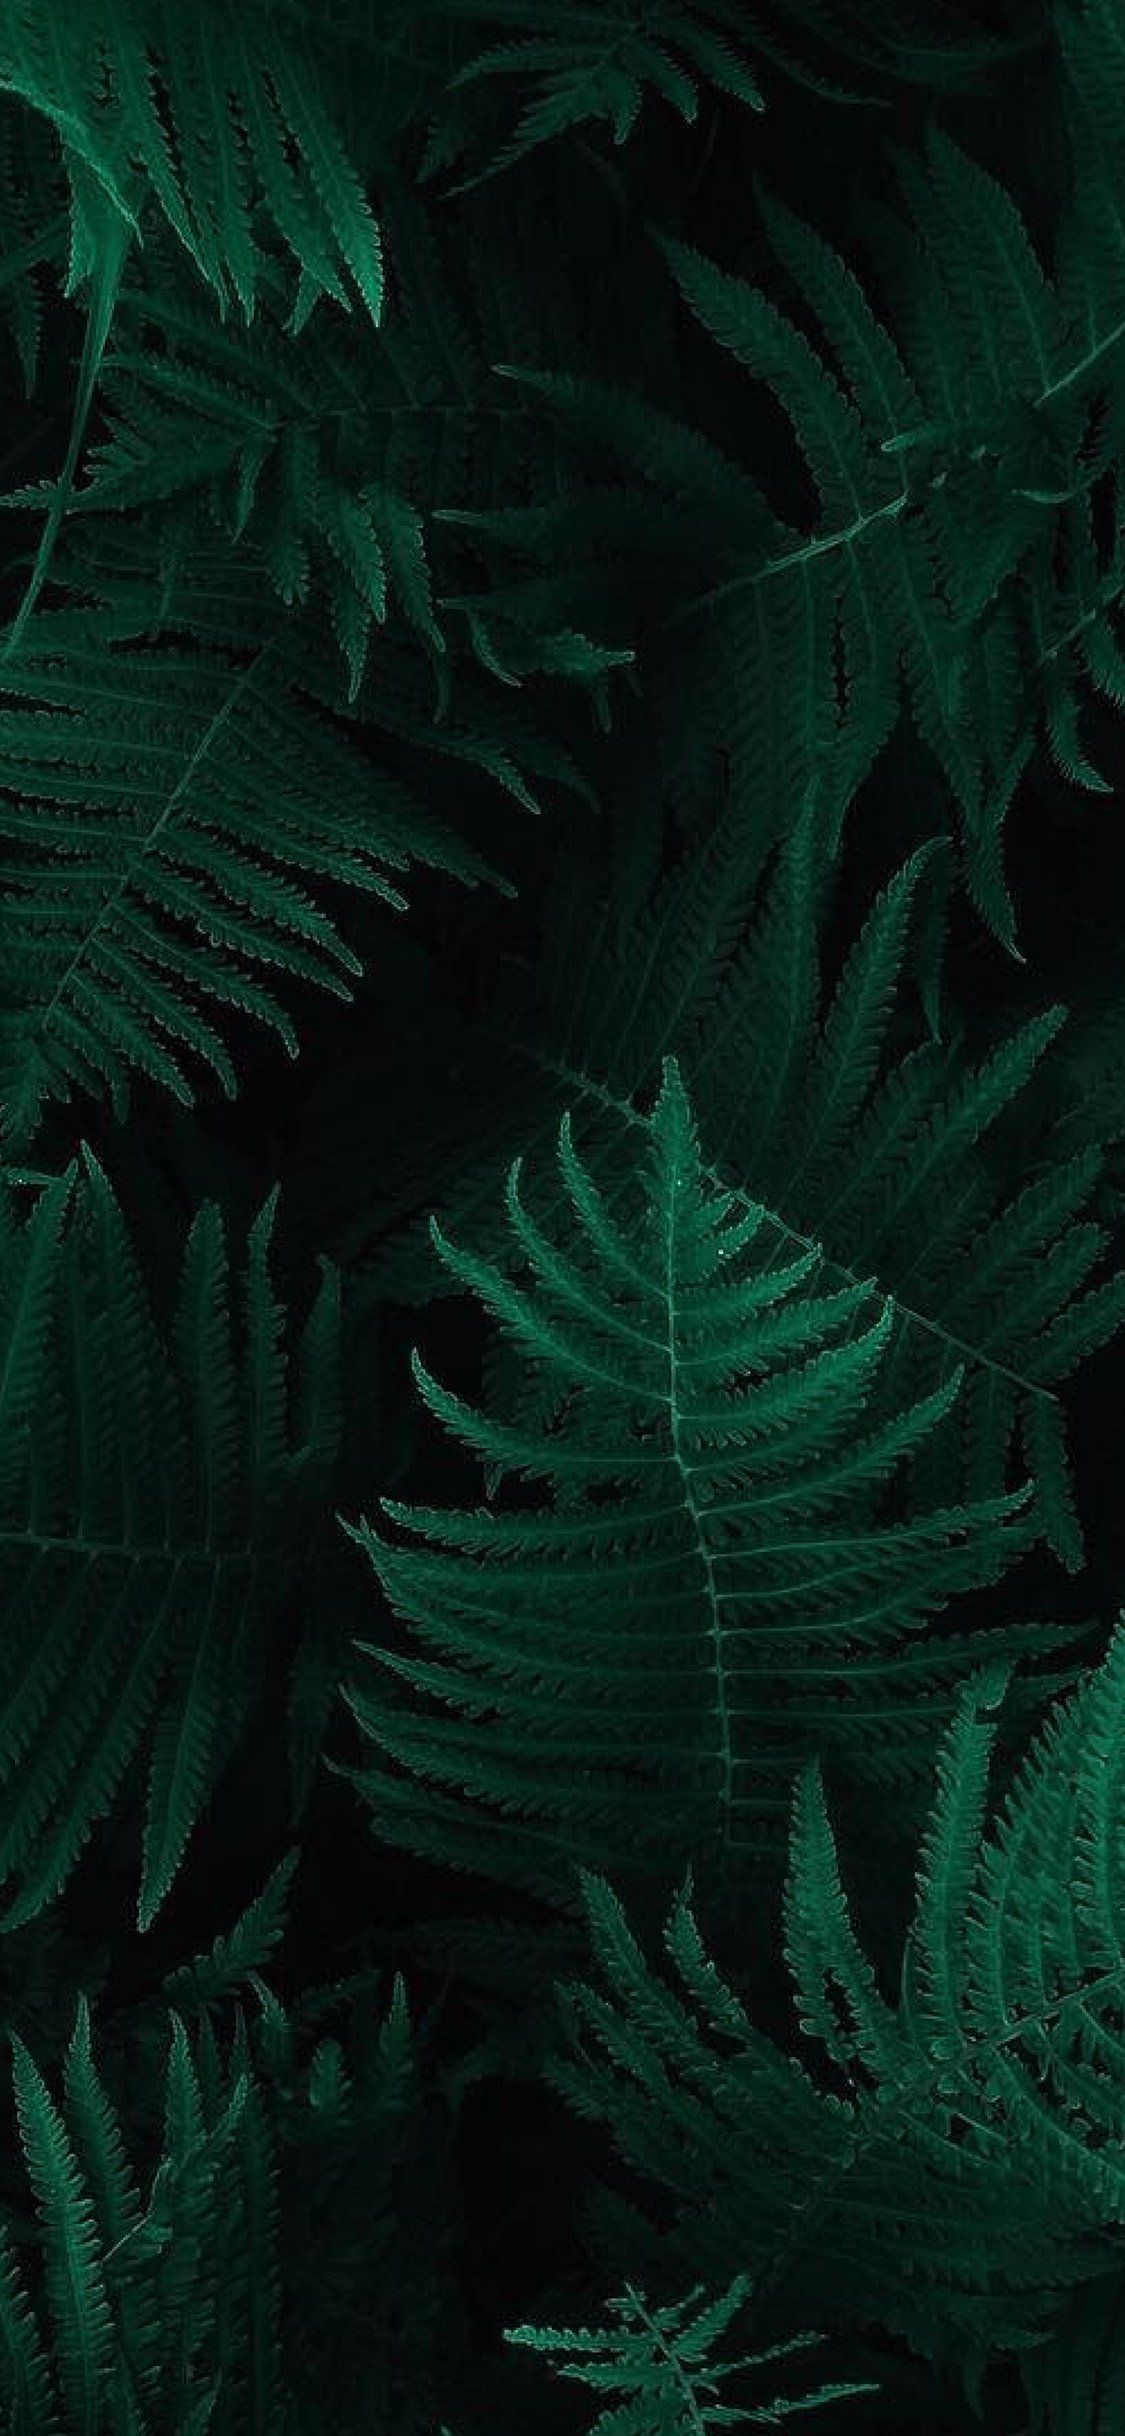 Dark Green Leaves iPhone Wallpaper Hd, HD Wallpaper & background